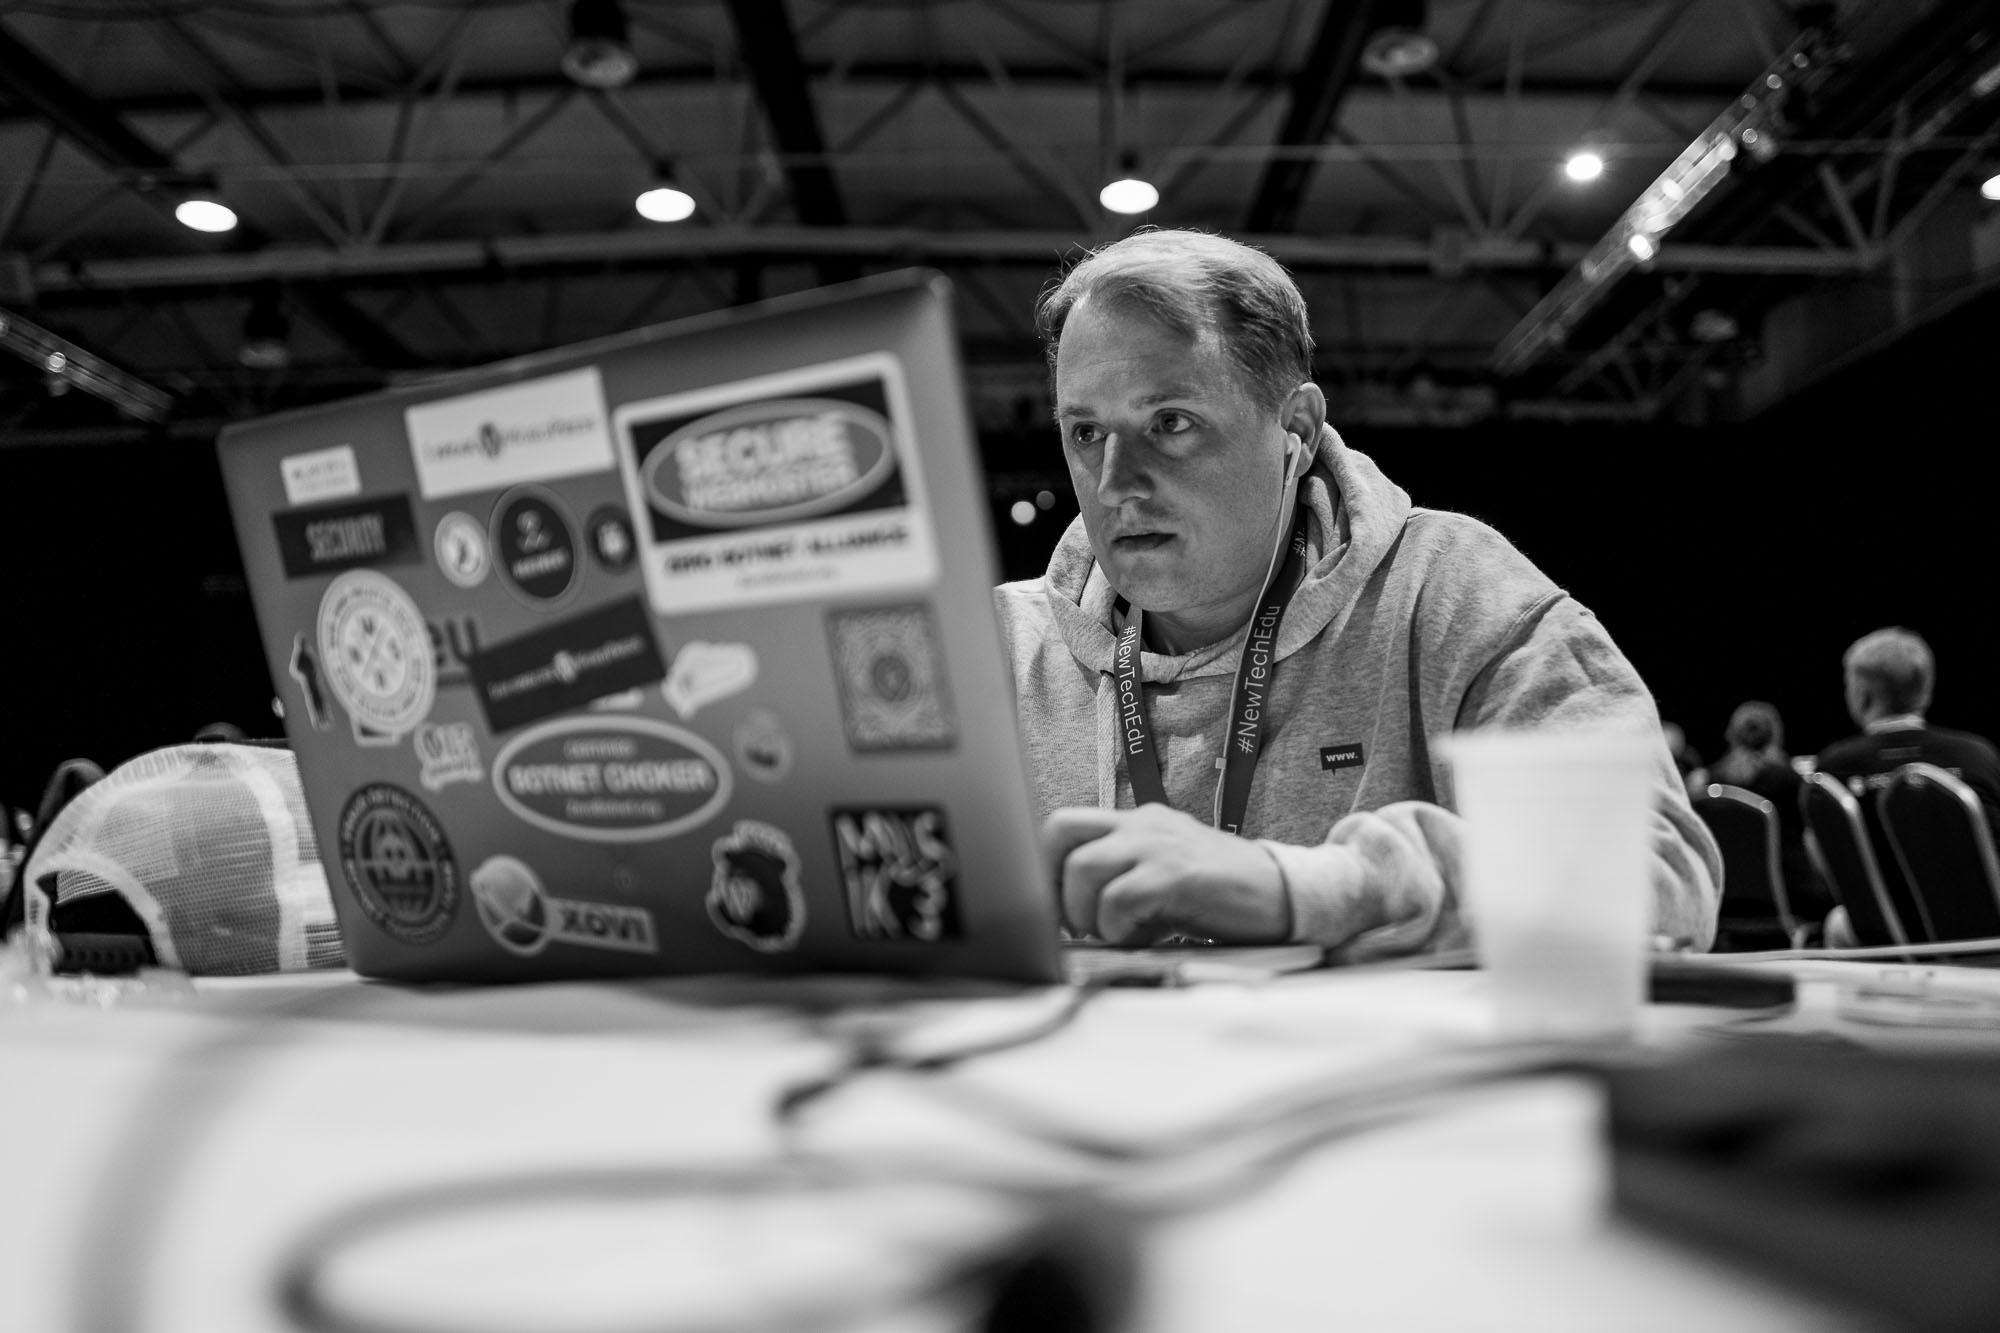 Contributor Nikolai Graf-Rüssel working on his laptop